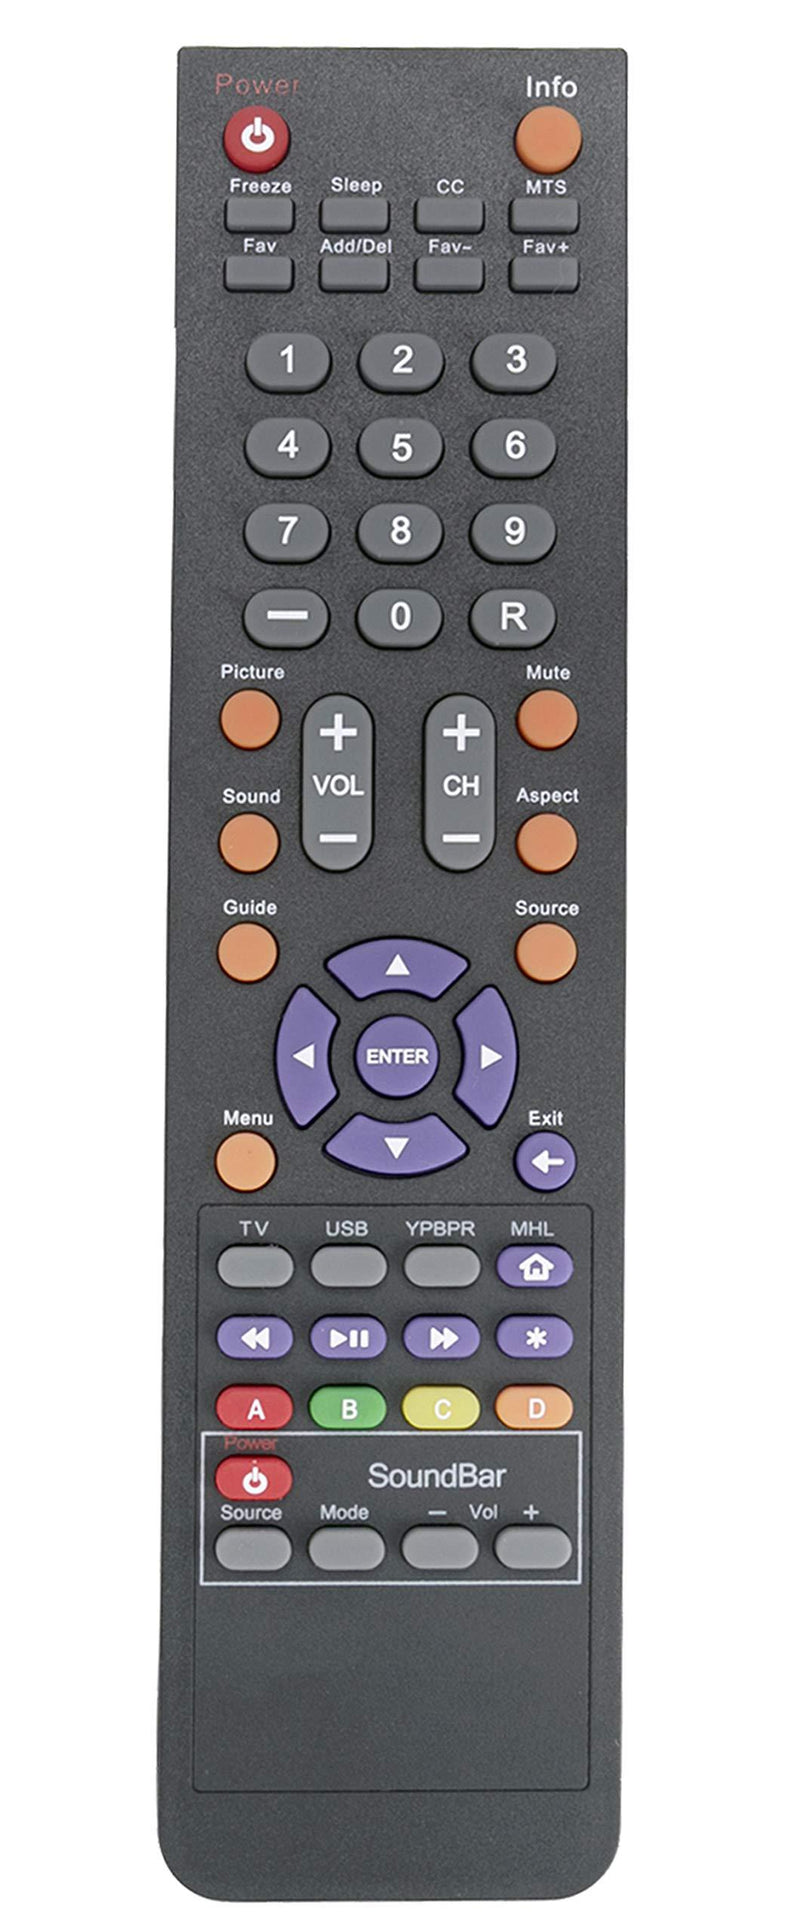 142022370010C Replaced Remote Control Compatible with Sceptre LCD HDTV X405BV-FMDU X405BV-FMQR X409BV-FHDR E205BD-SMQC E325ud-mqr E246 Series X32 E325bv-mqc E32 Series X32 Series X322BV-MQR X405